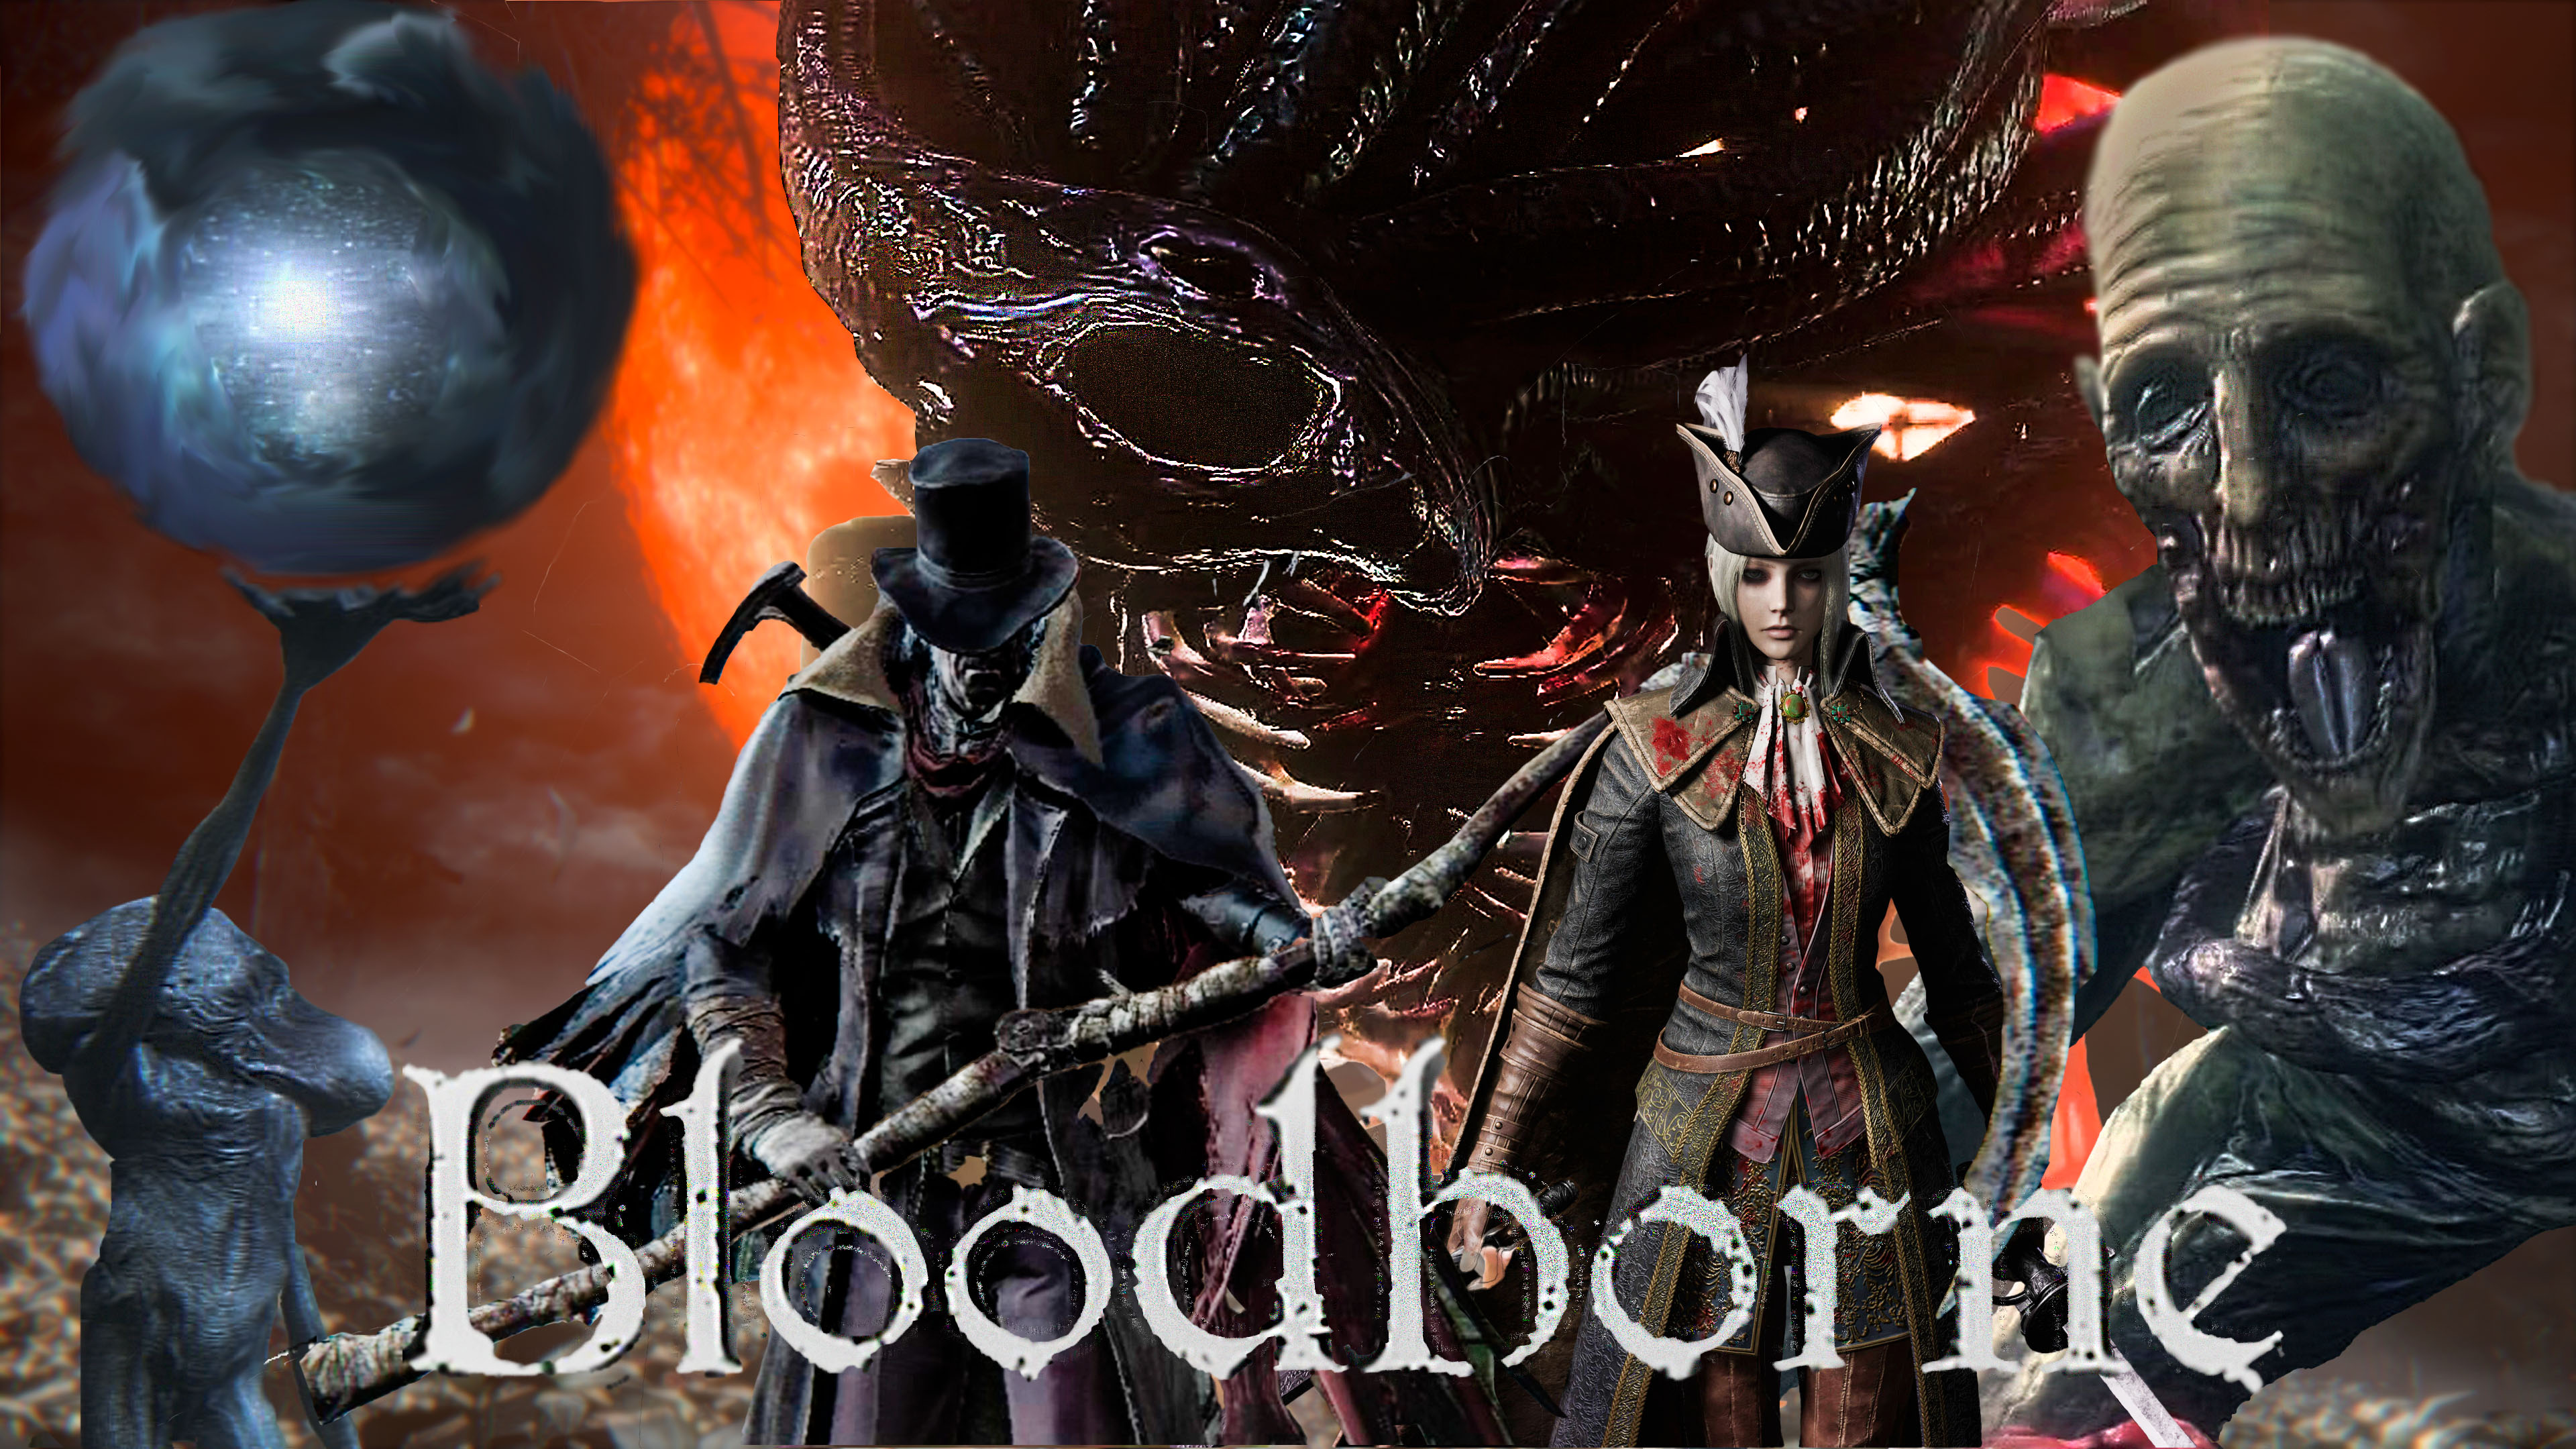 Финал p(╬ Ò ‸ Ó)q Bloodborne  №19